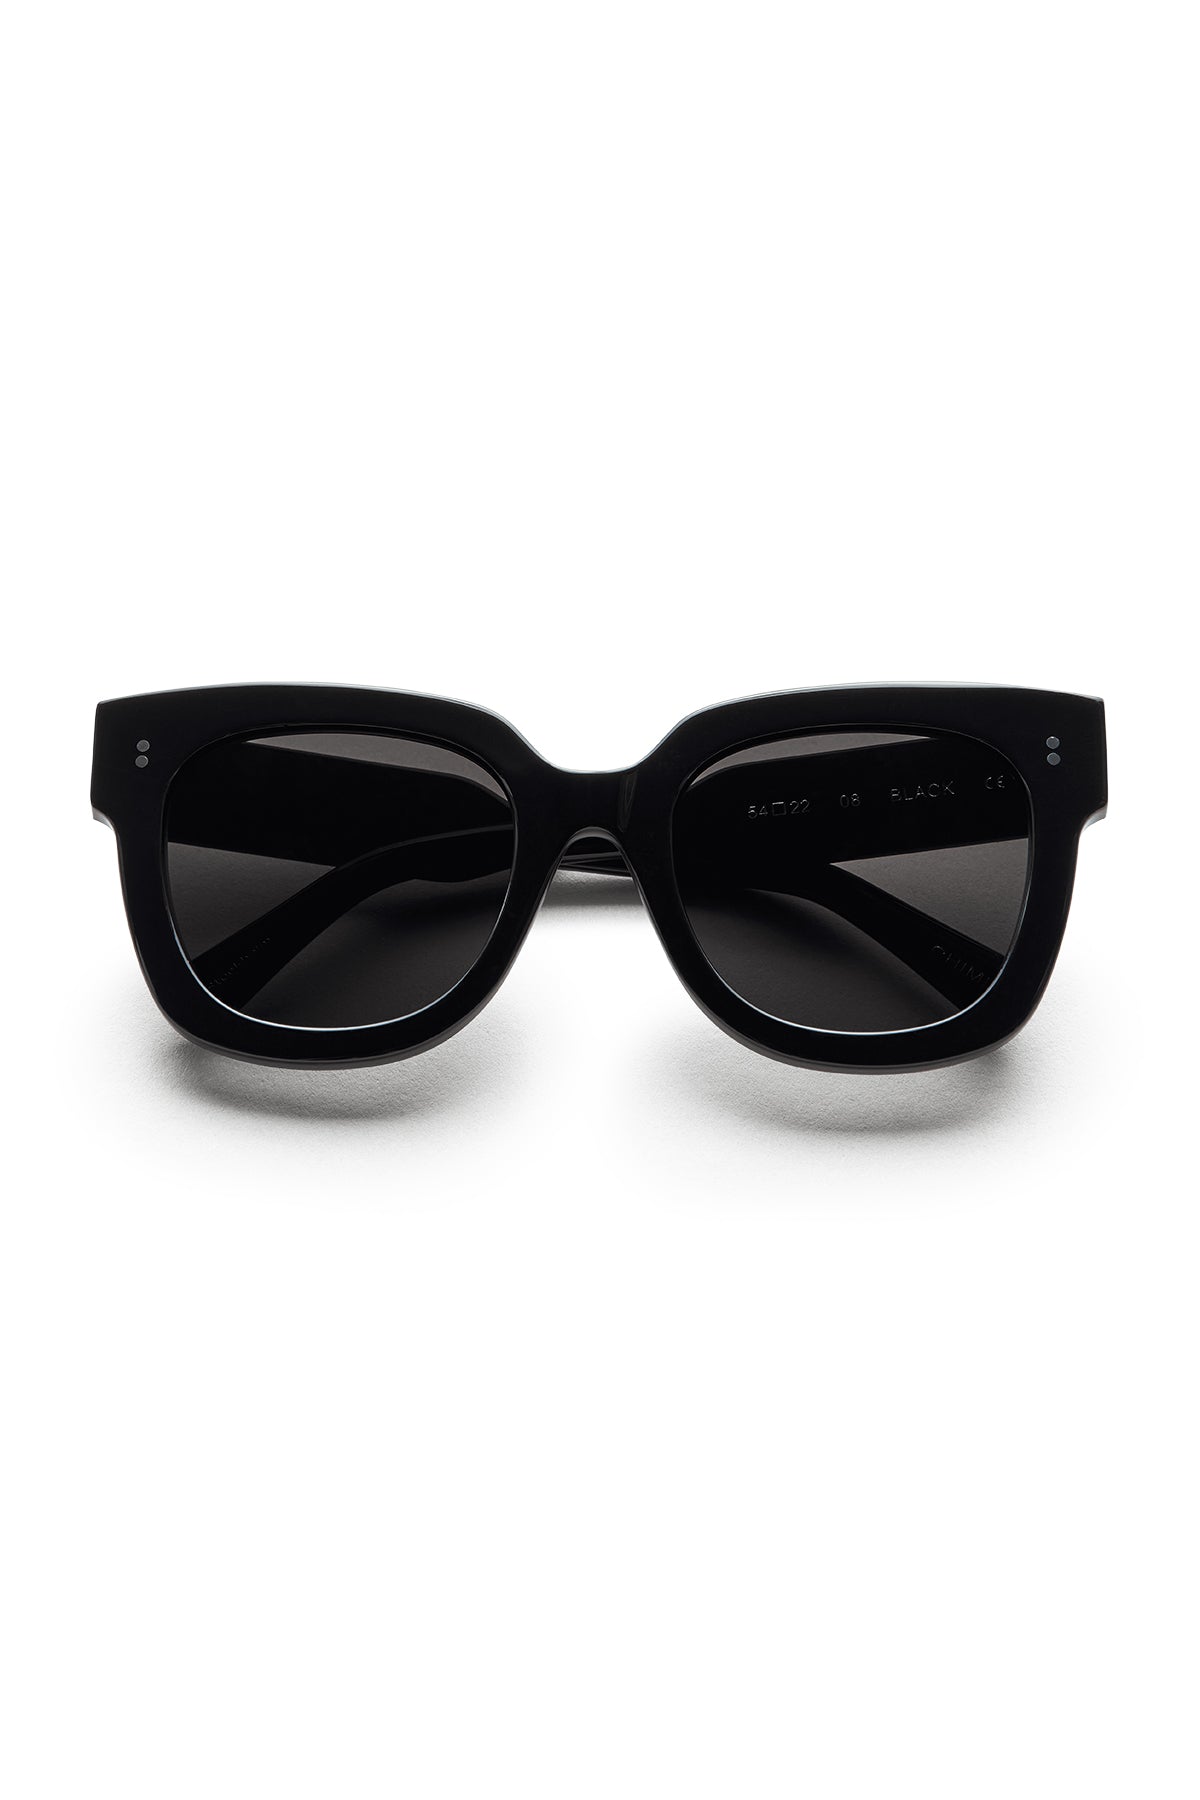 Chimi 08 Sunglasses Black Front-22132856619201